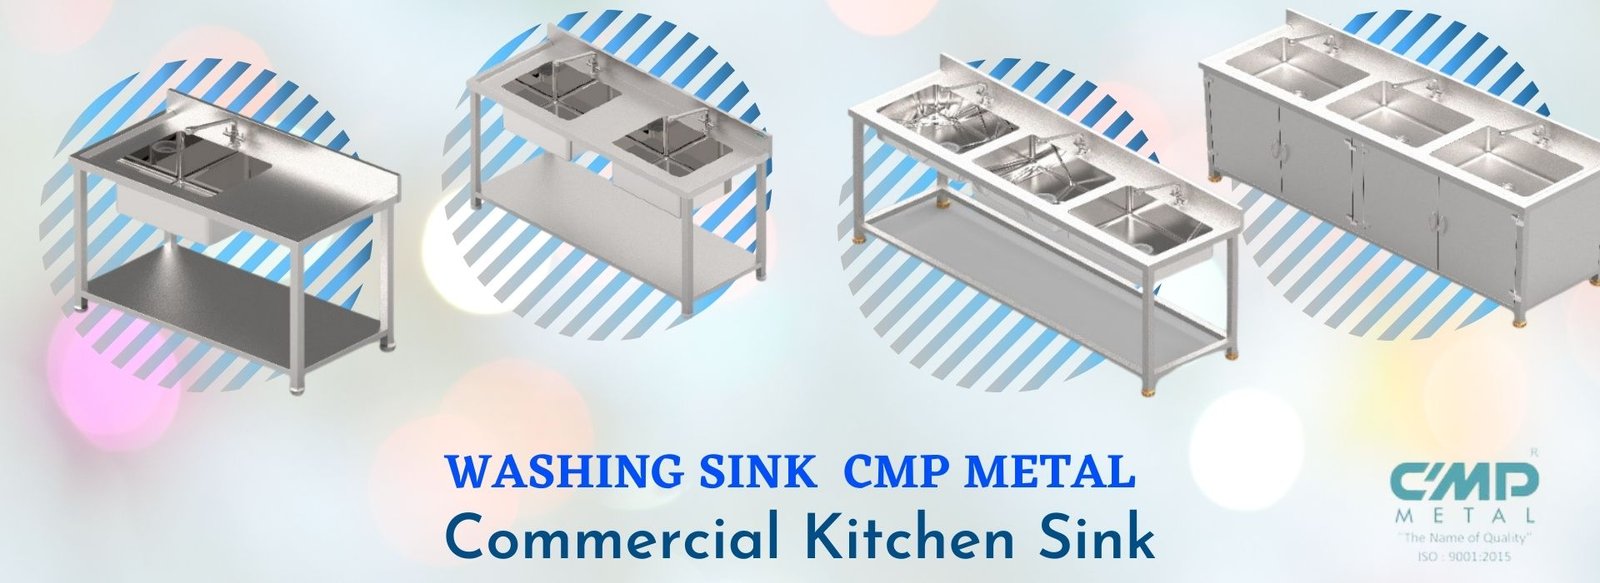 Washing Sink Cmp Metal Commercial Kitchen Sink